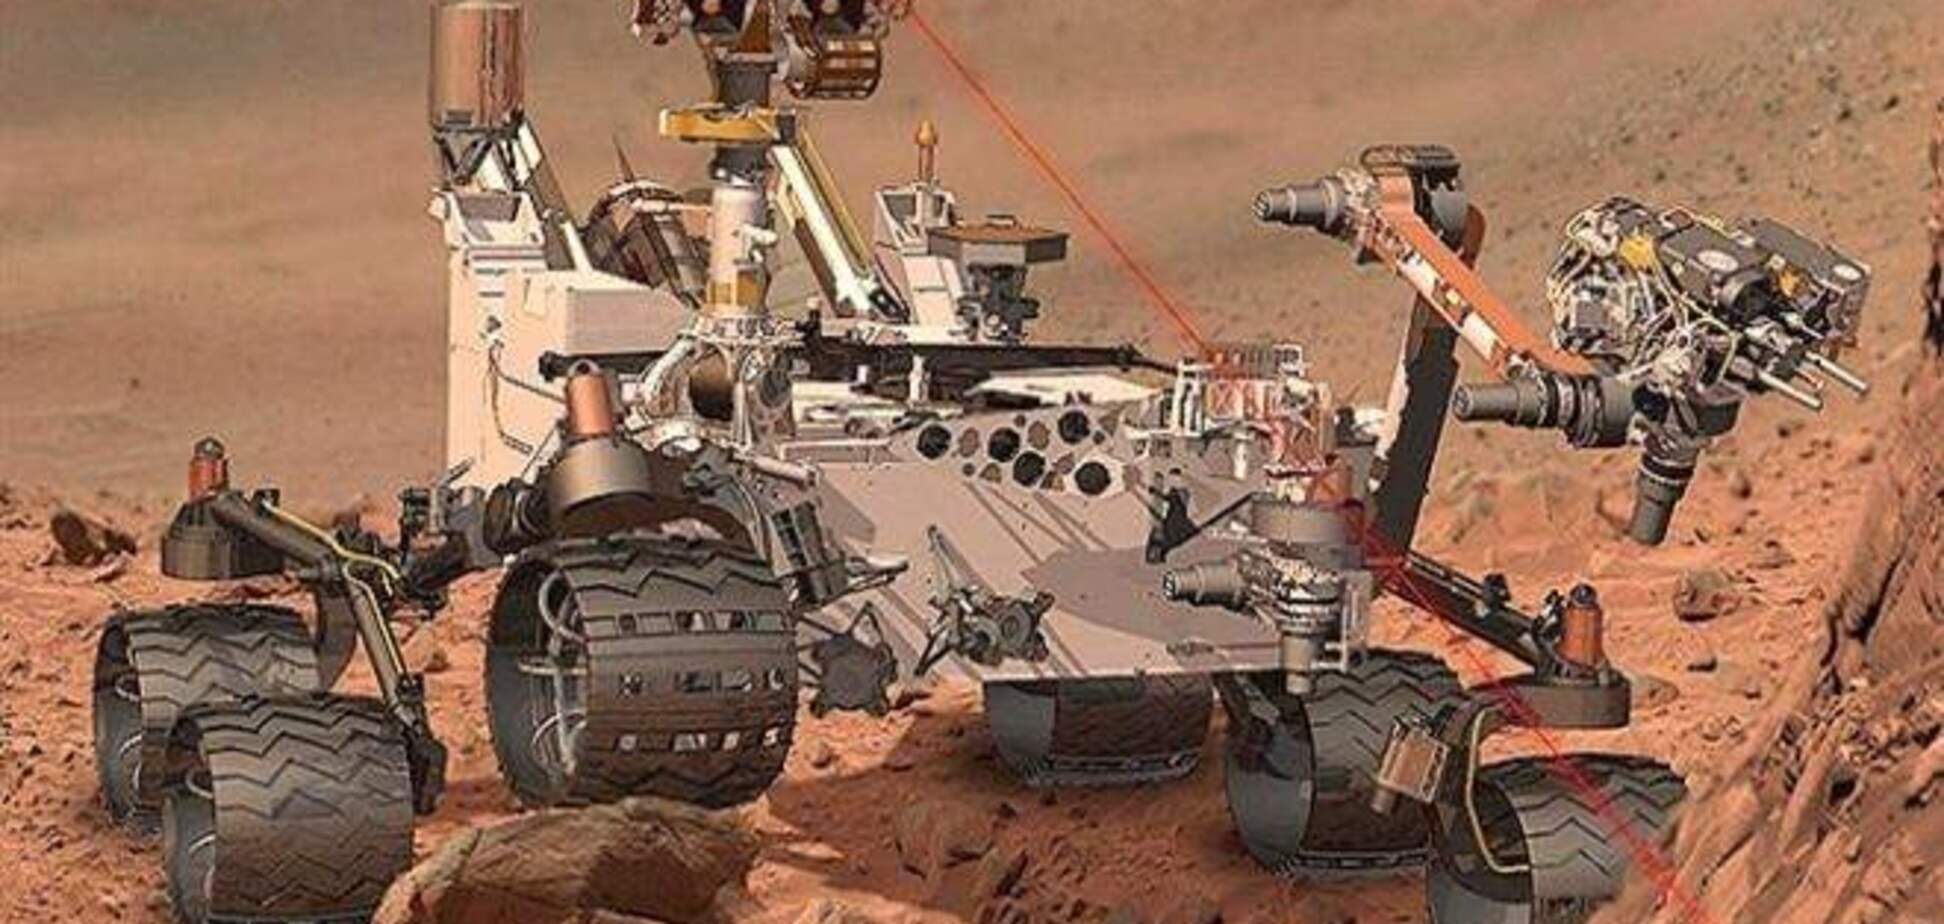 Марсоход Curiosity не прекращал свою работу